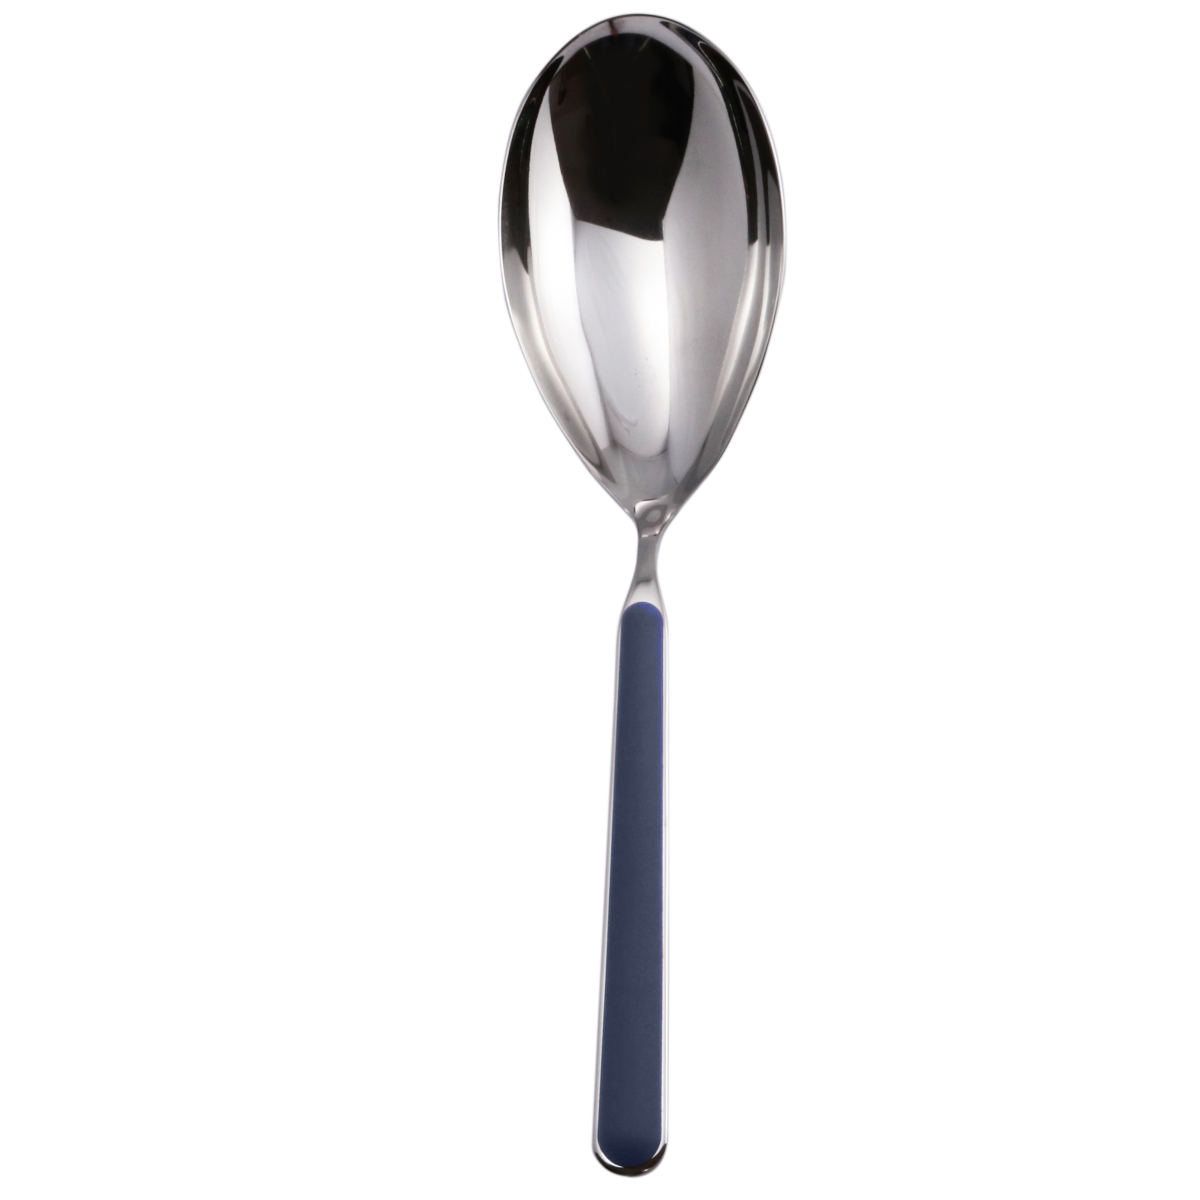 10c61143 Fantasia Risotto Spoon, Cobalt